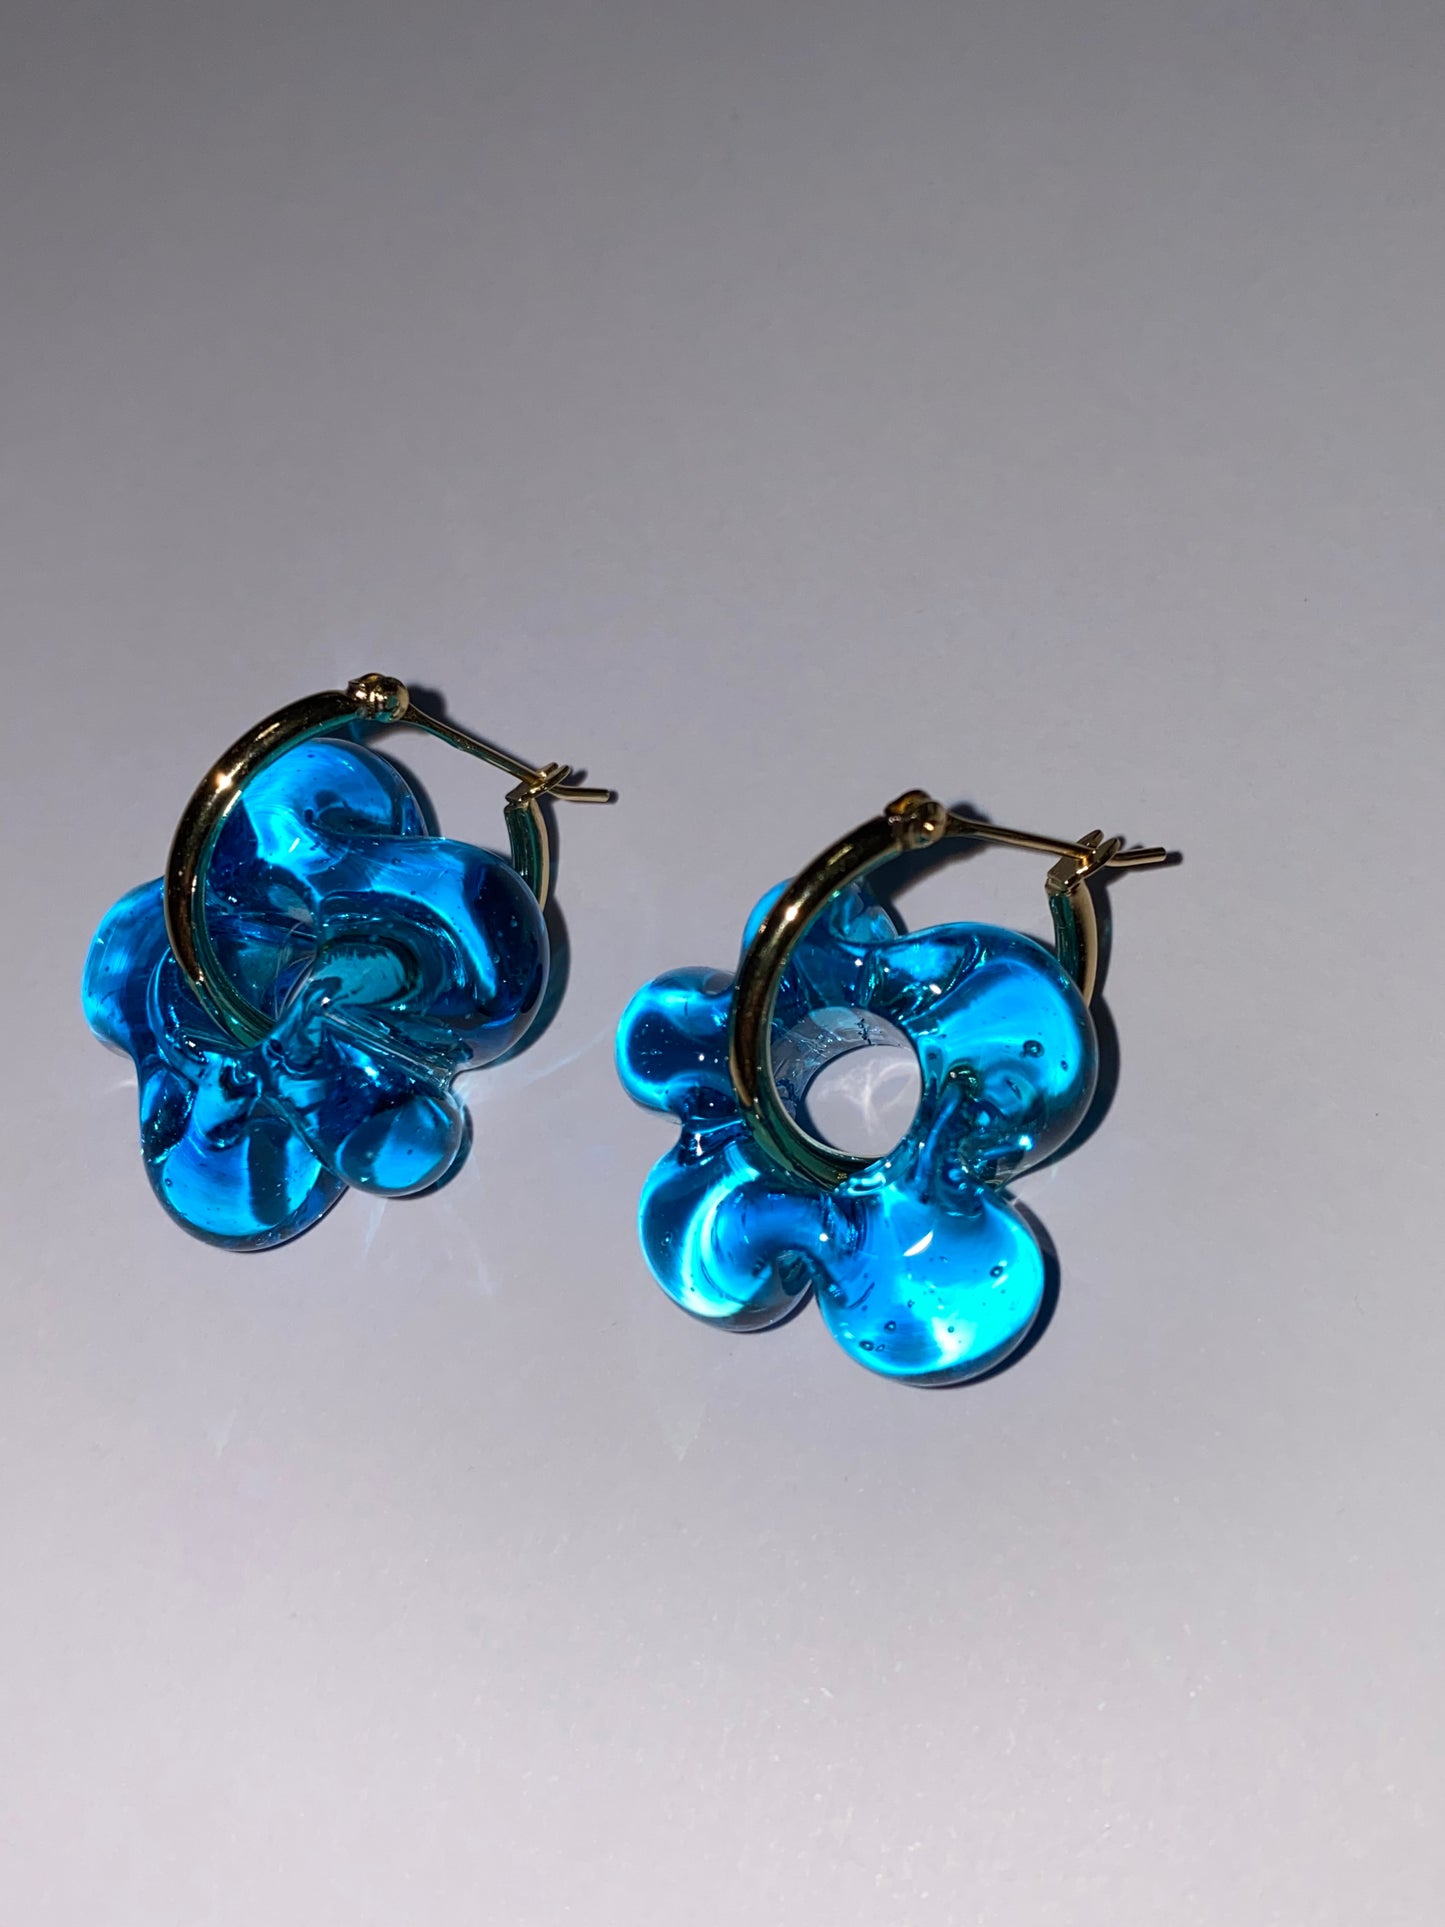 Mini Fleur earrings - Turquoise